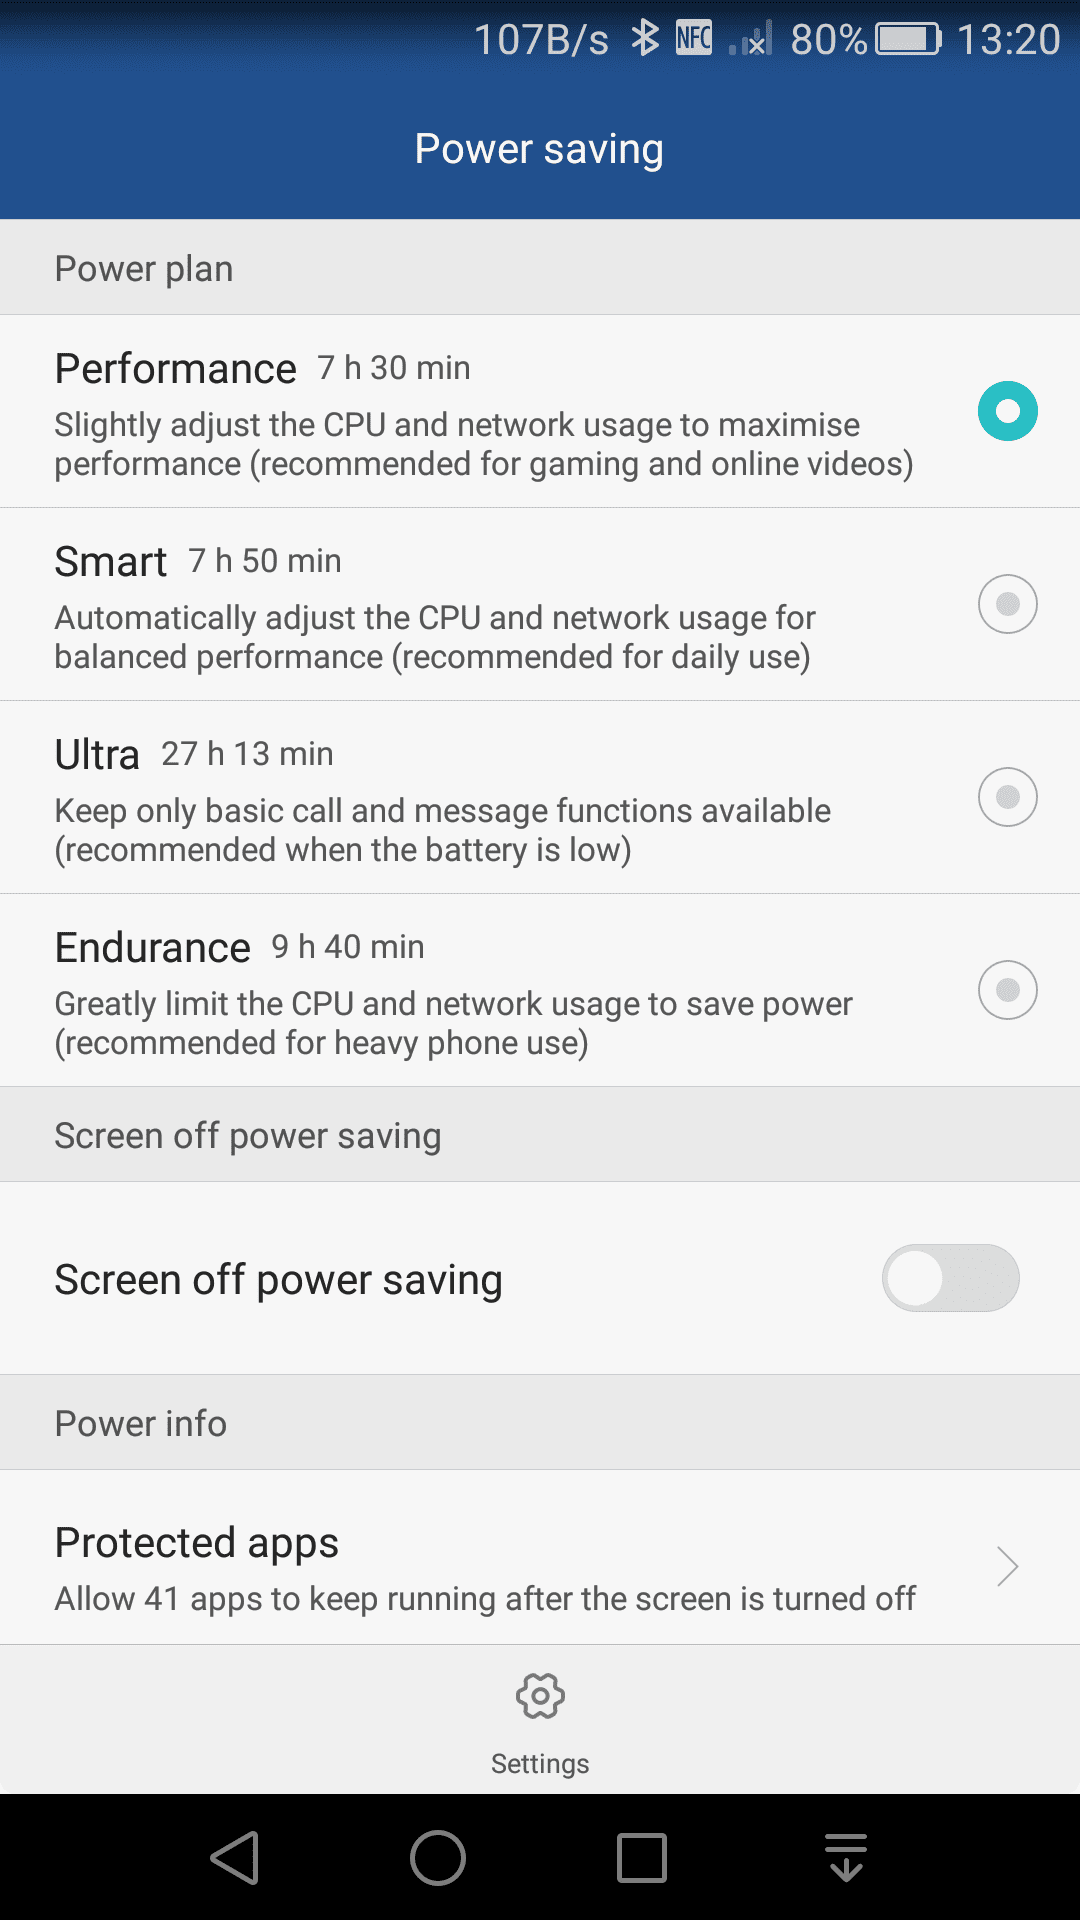 New power saving options - Endurance mode & Screen off power saving